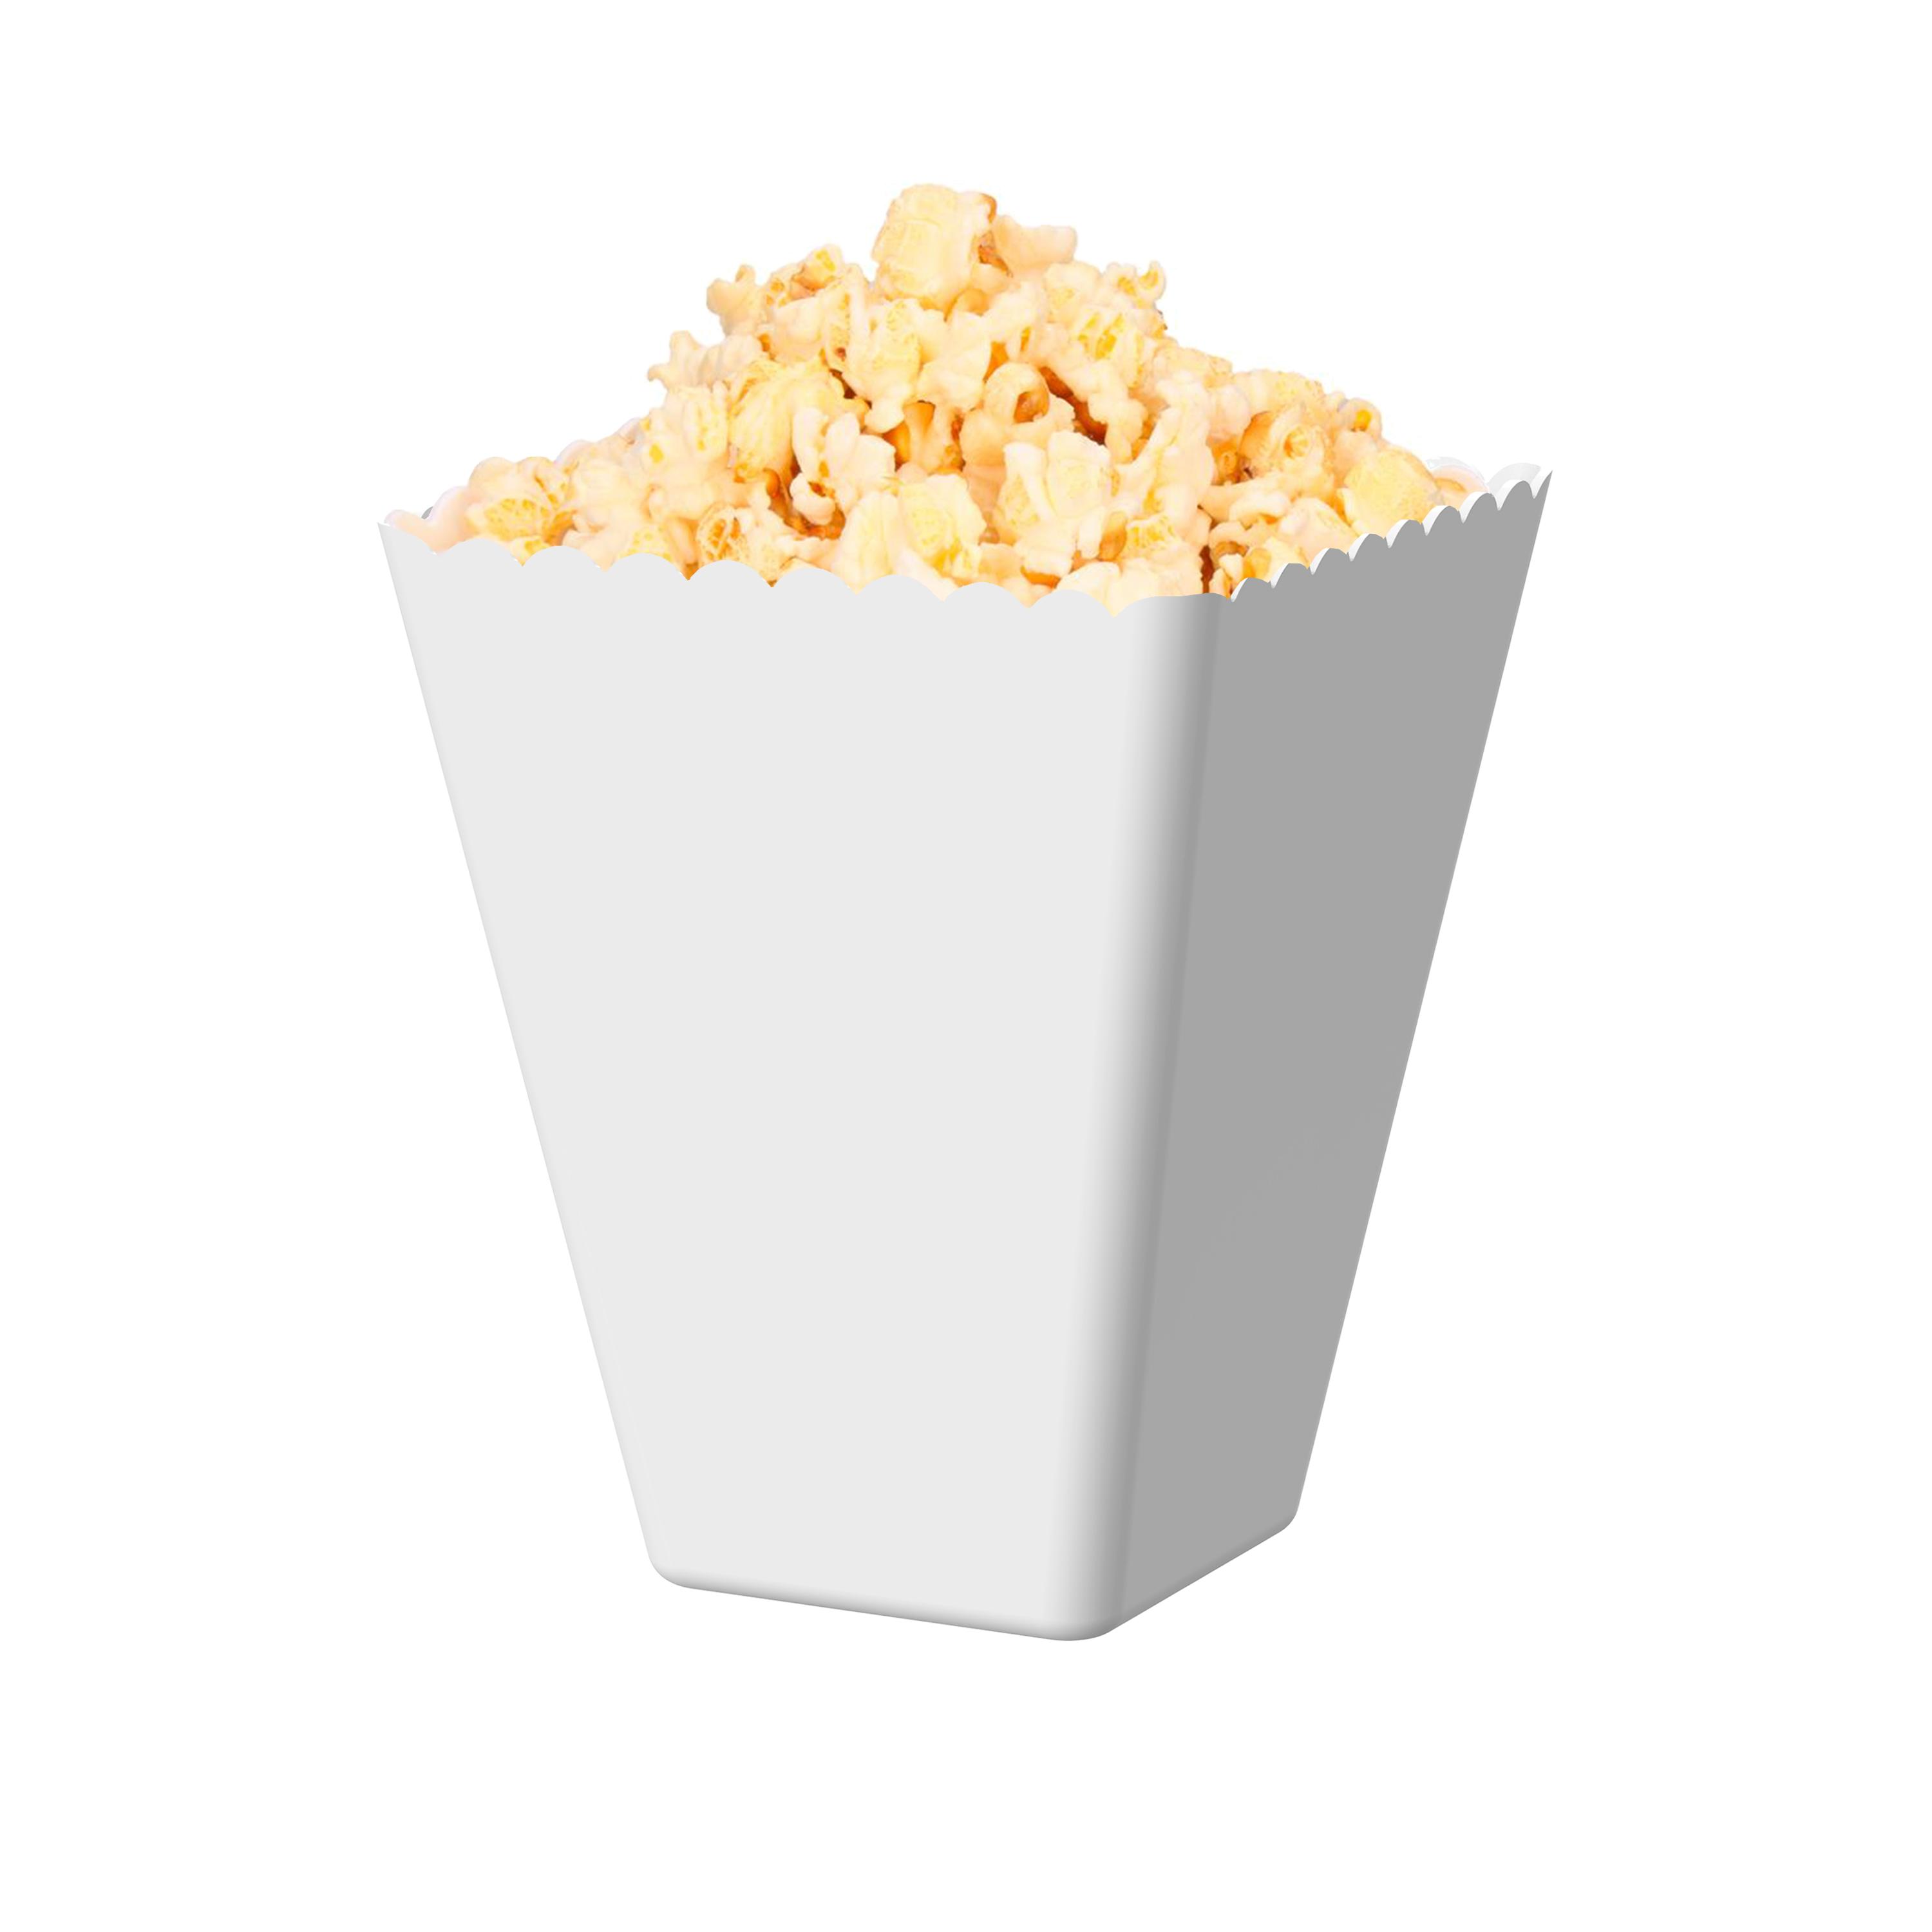 Popcornschale Hollywood